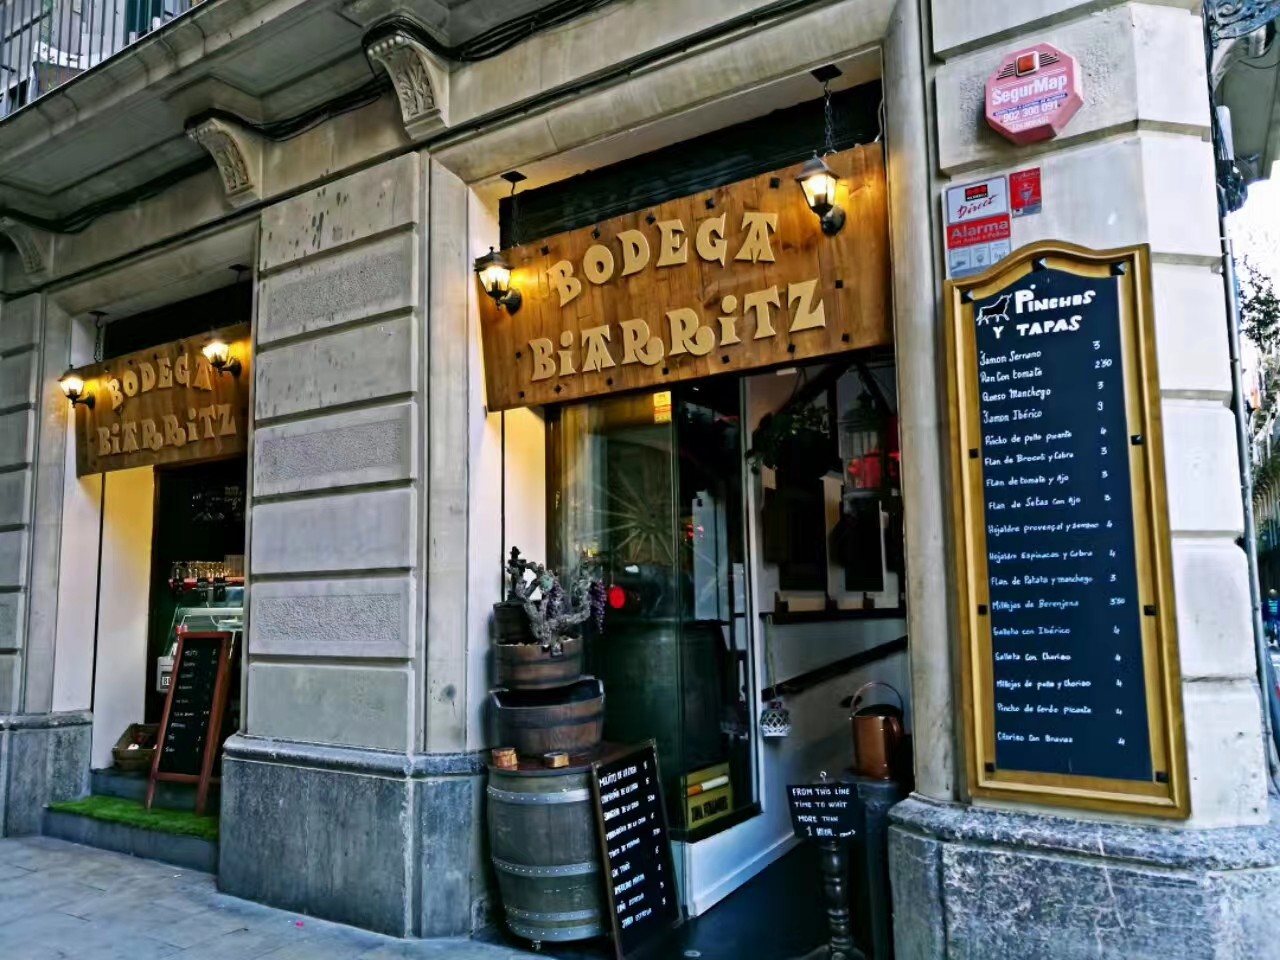 Bar Bodega Biarritz 1881 em Barcelona